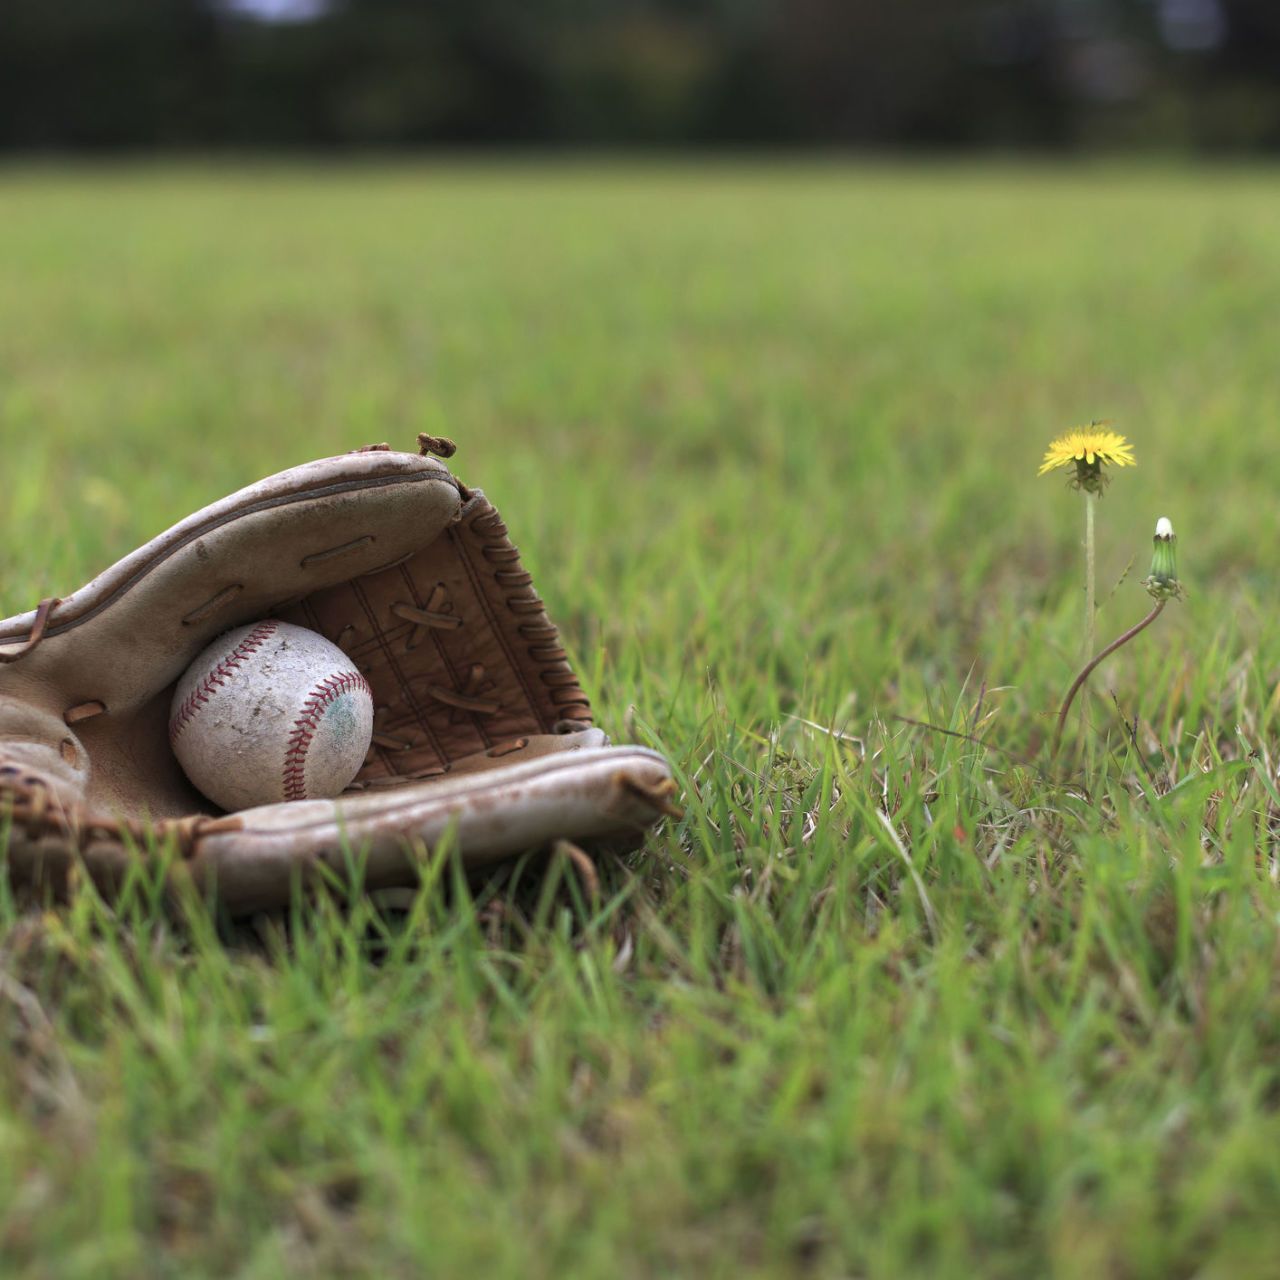 Grass, Baseball glove, Tree, Plant, Personal protective equipment, Grassland, 